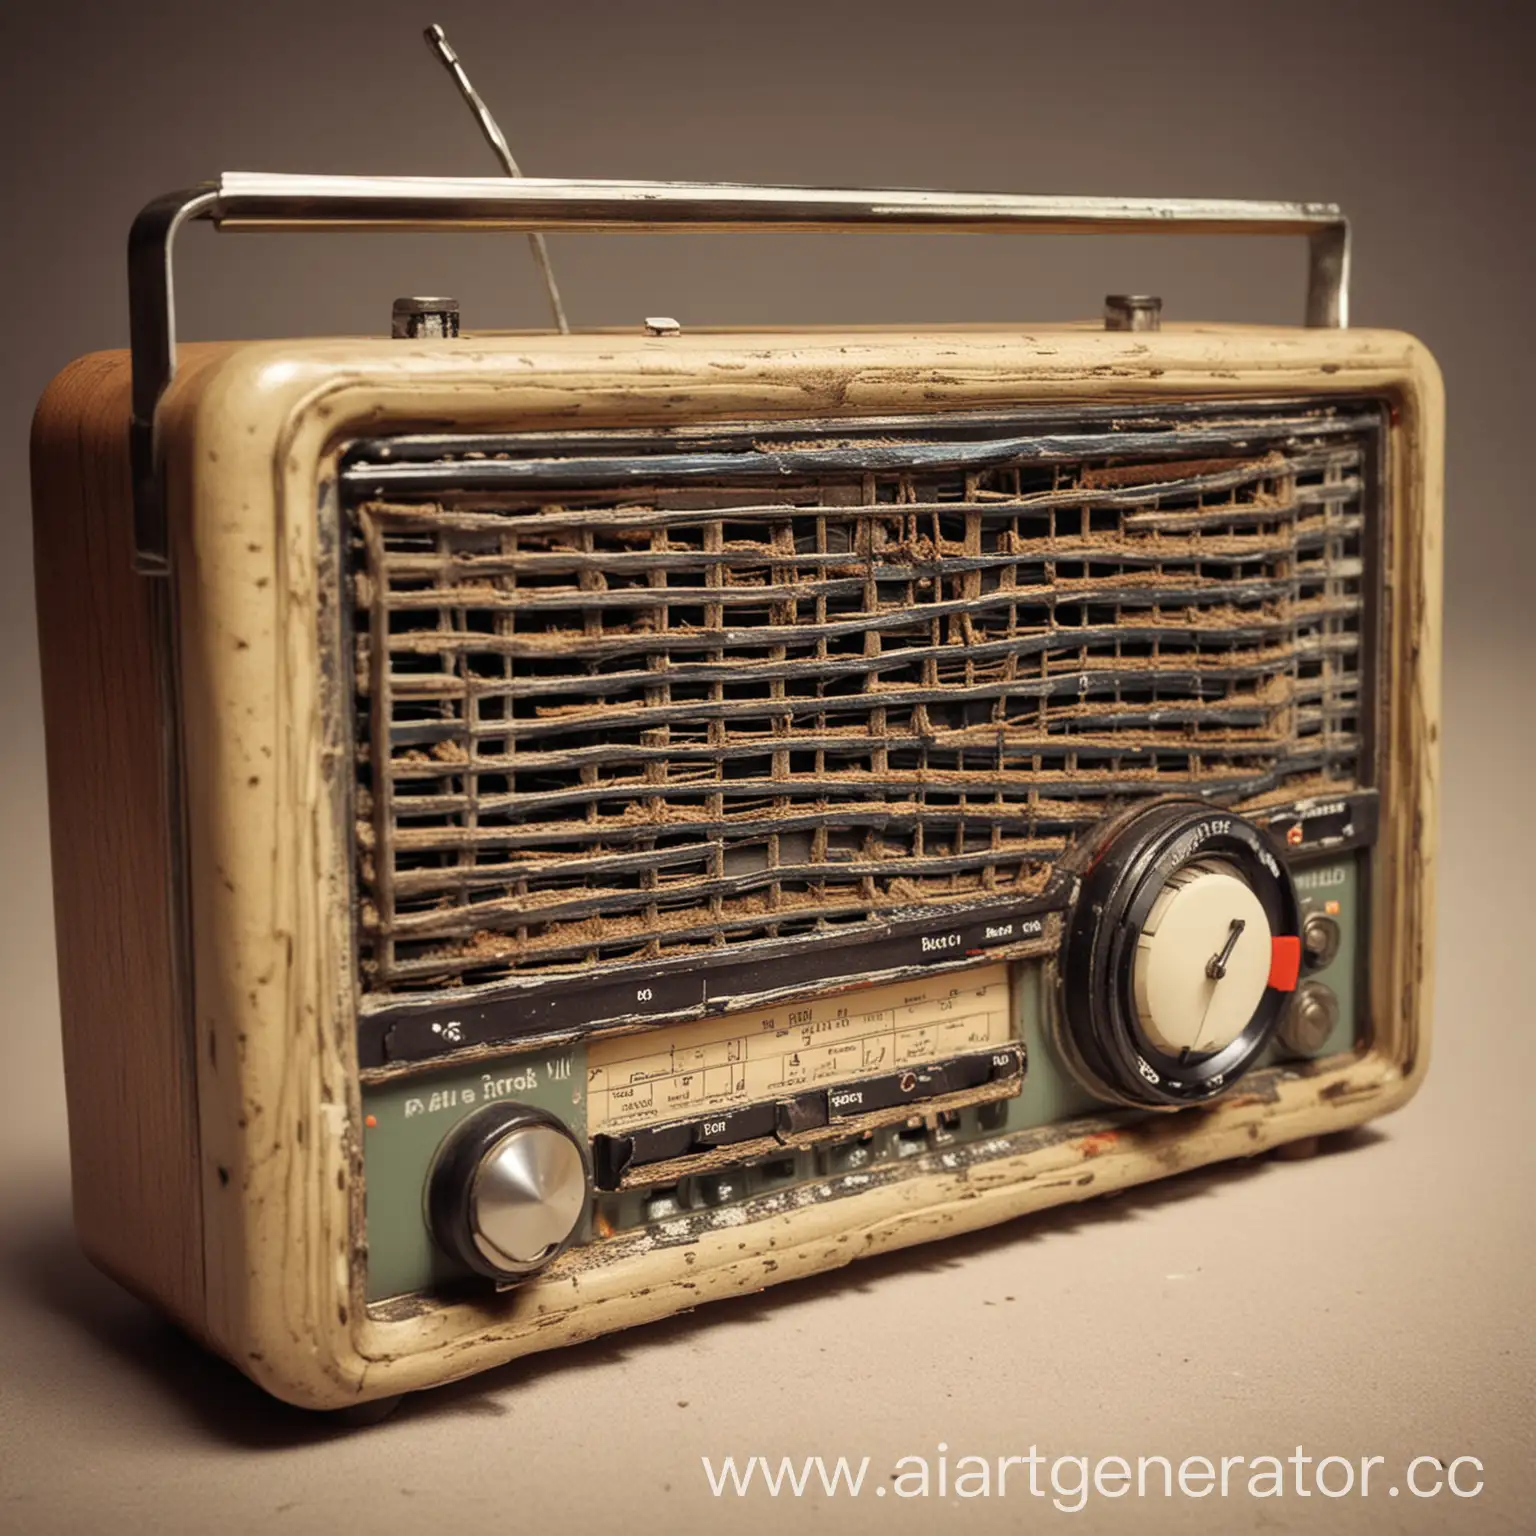 Vintage-Radio-Broadcasting-Retro-Vibes